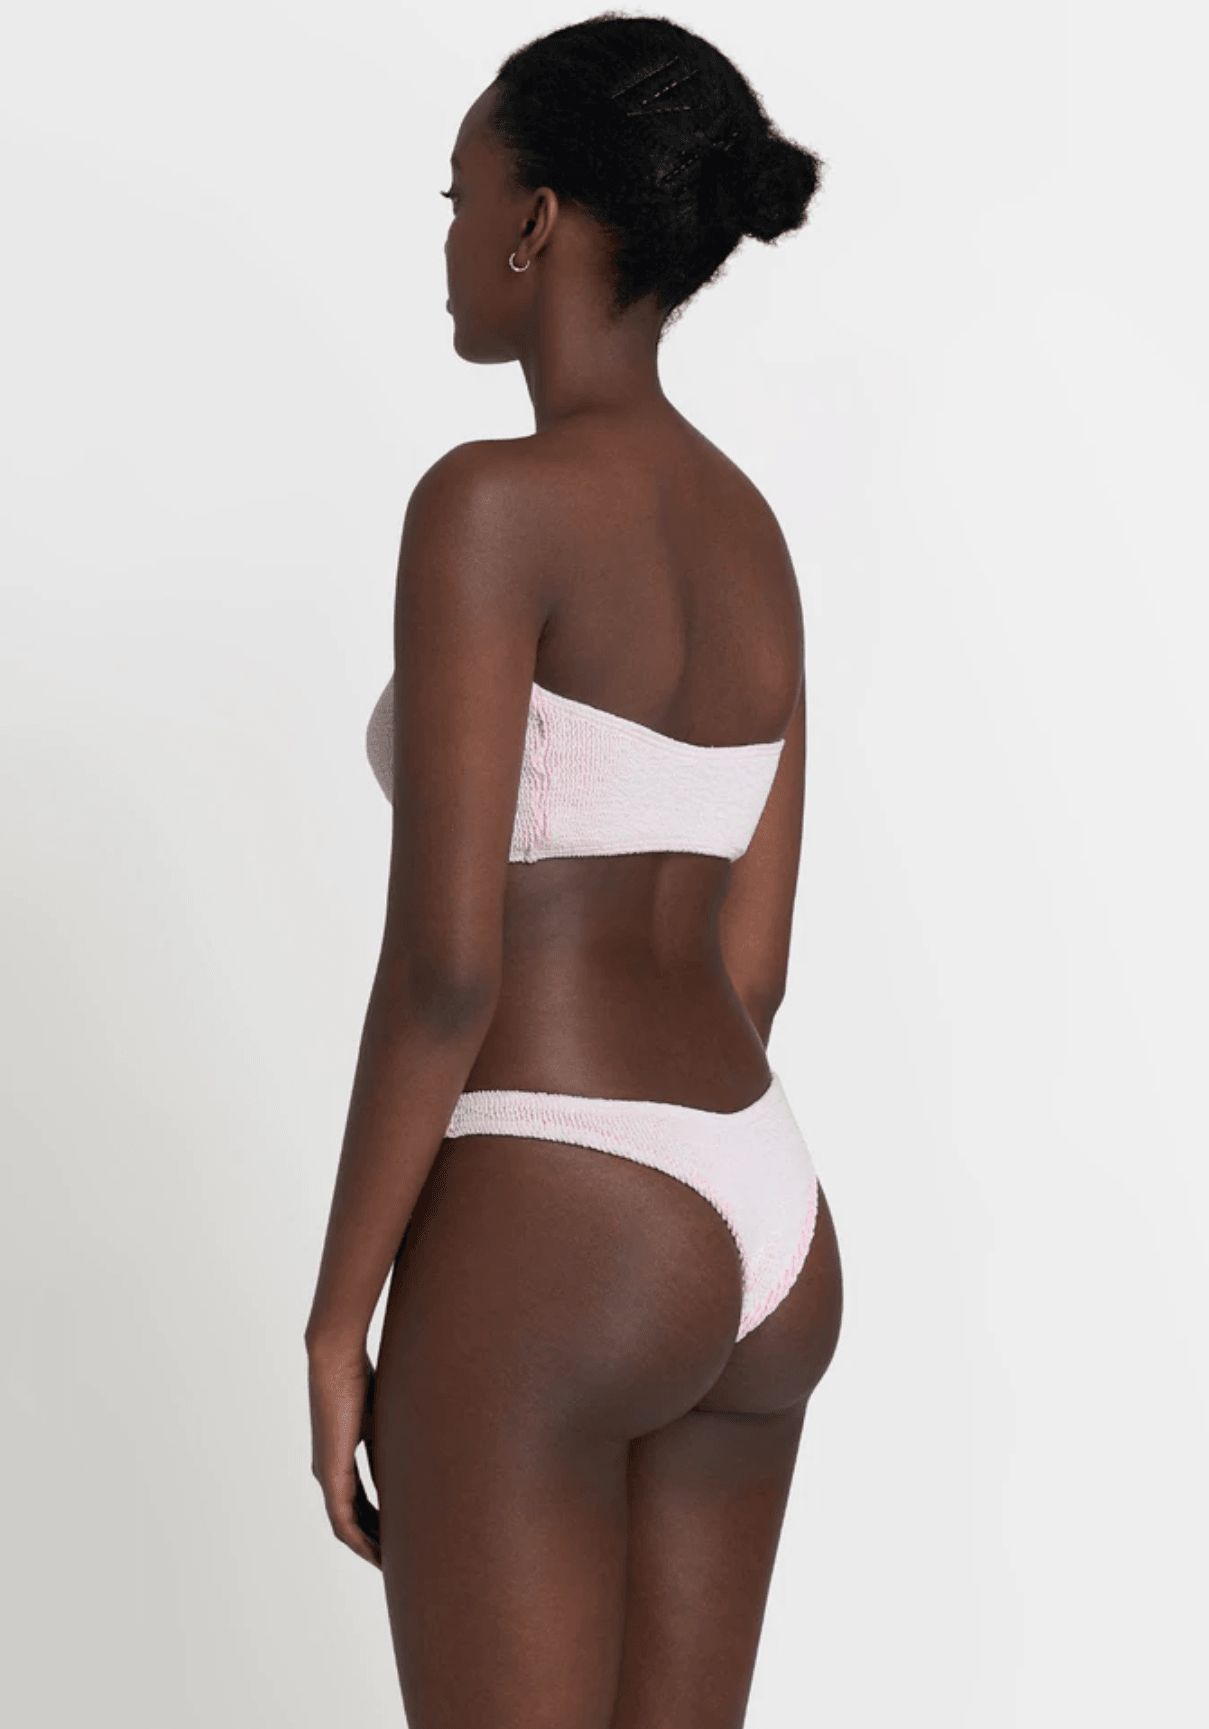 Bond Eye - Sahara Bandeau Bikini Top in White and Neon Pink - OutDazl